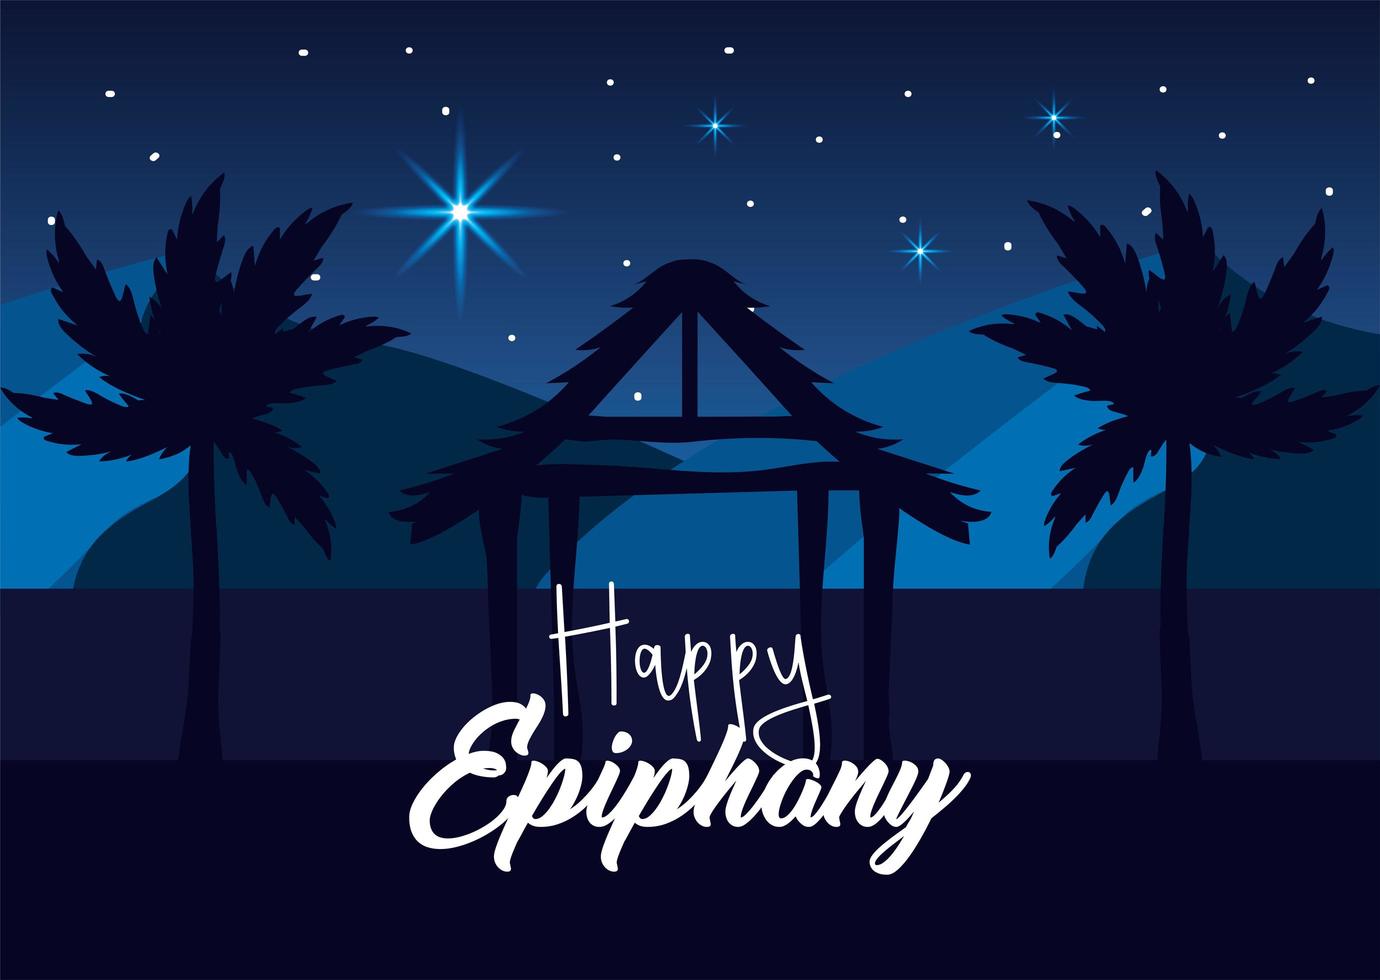 Happy epiphany greeting card vector